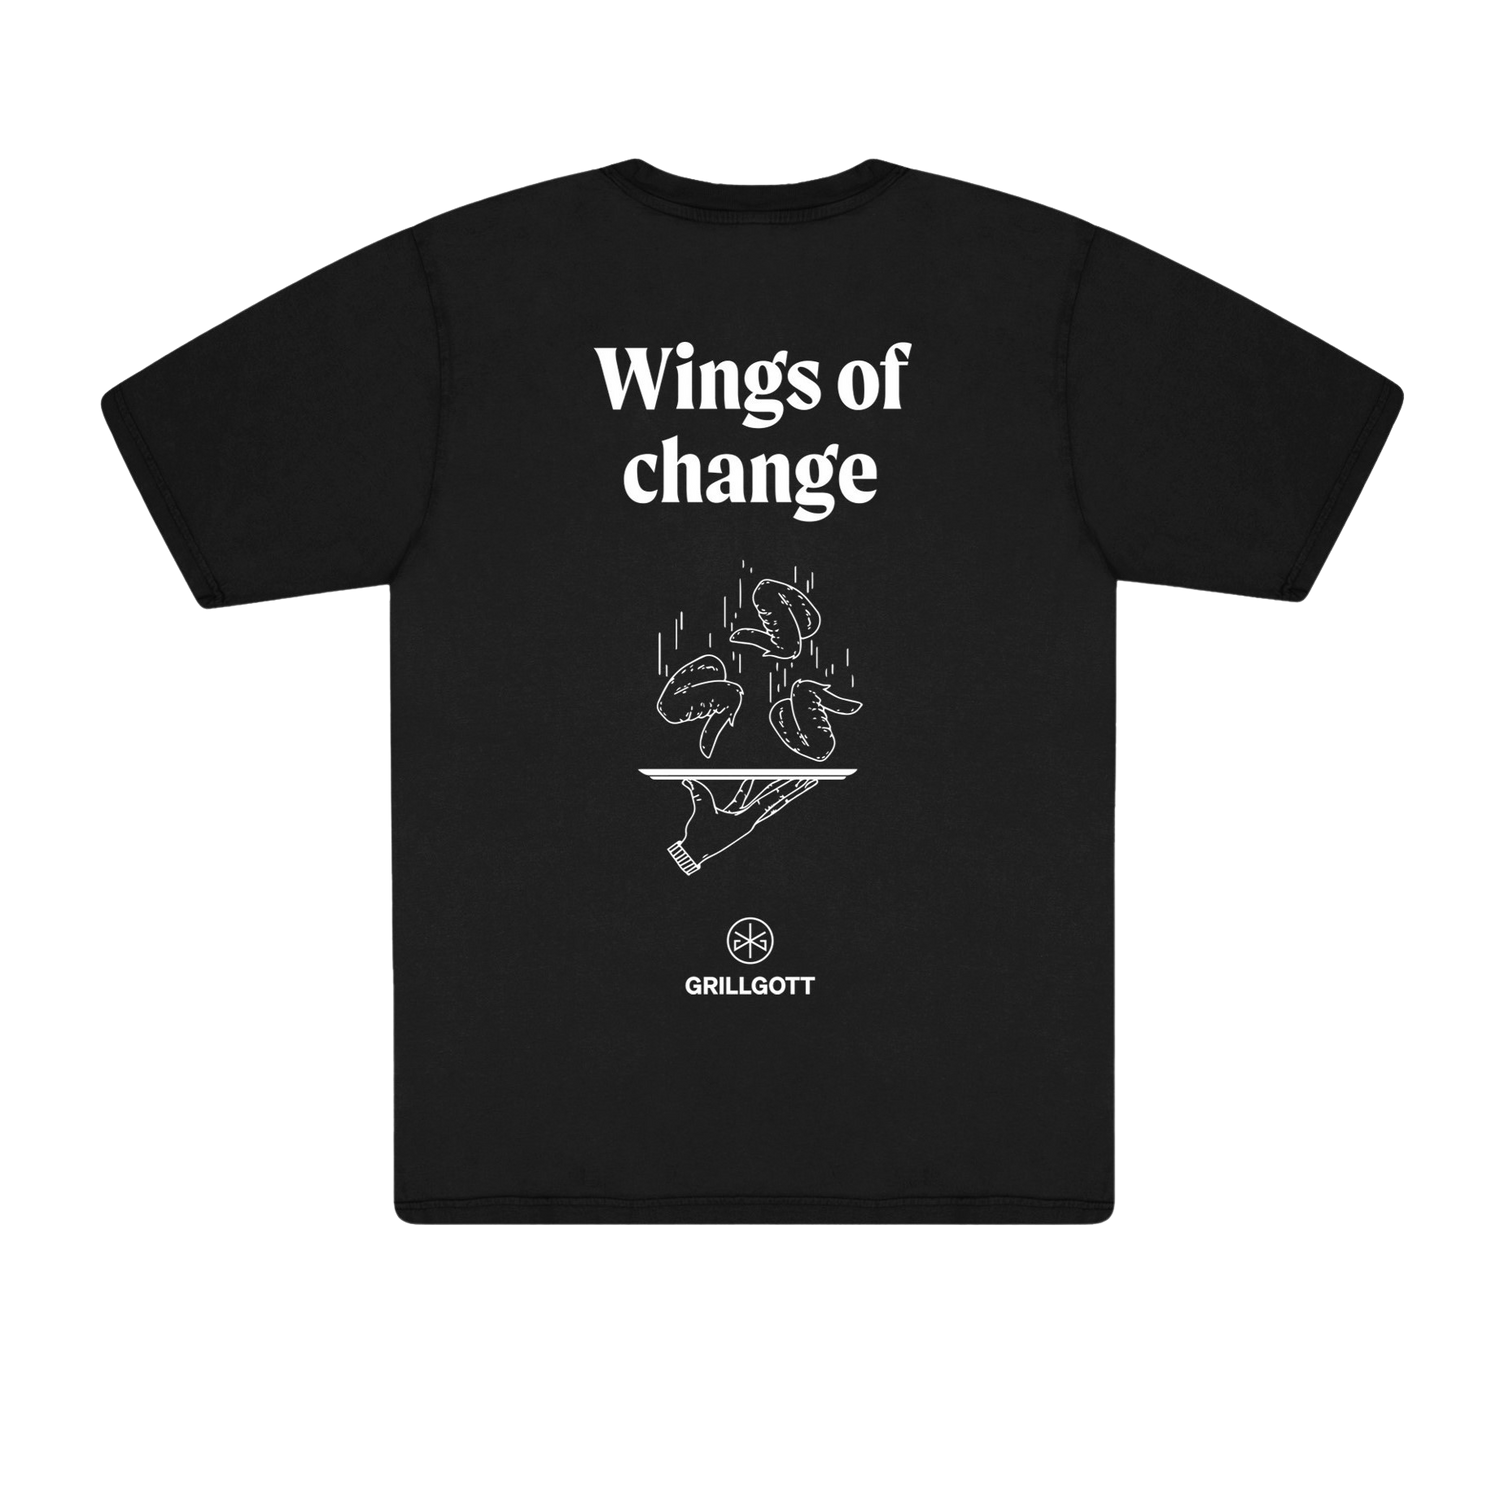 Grillgott T-Shirt XXL "Wings of change"